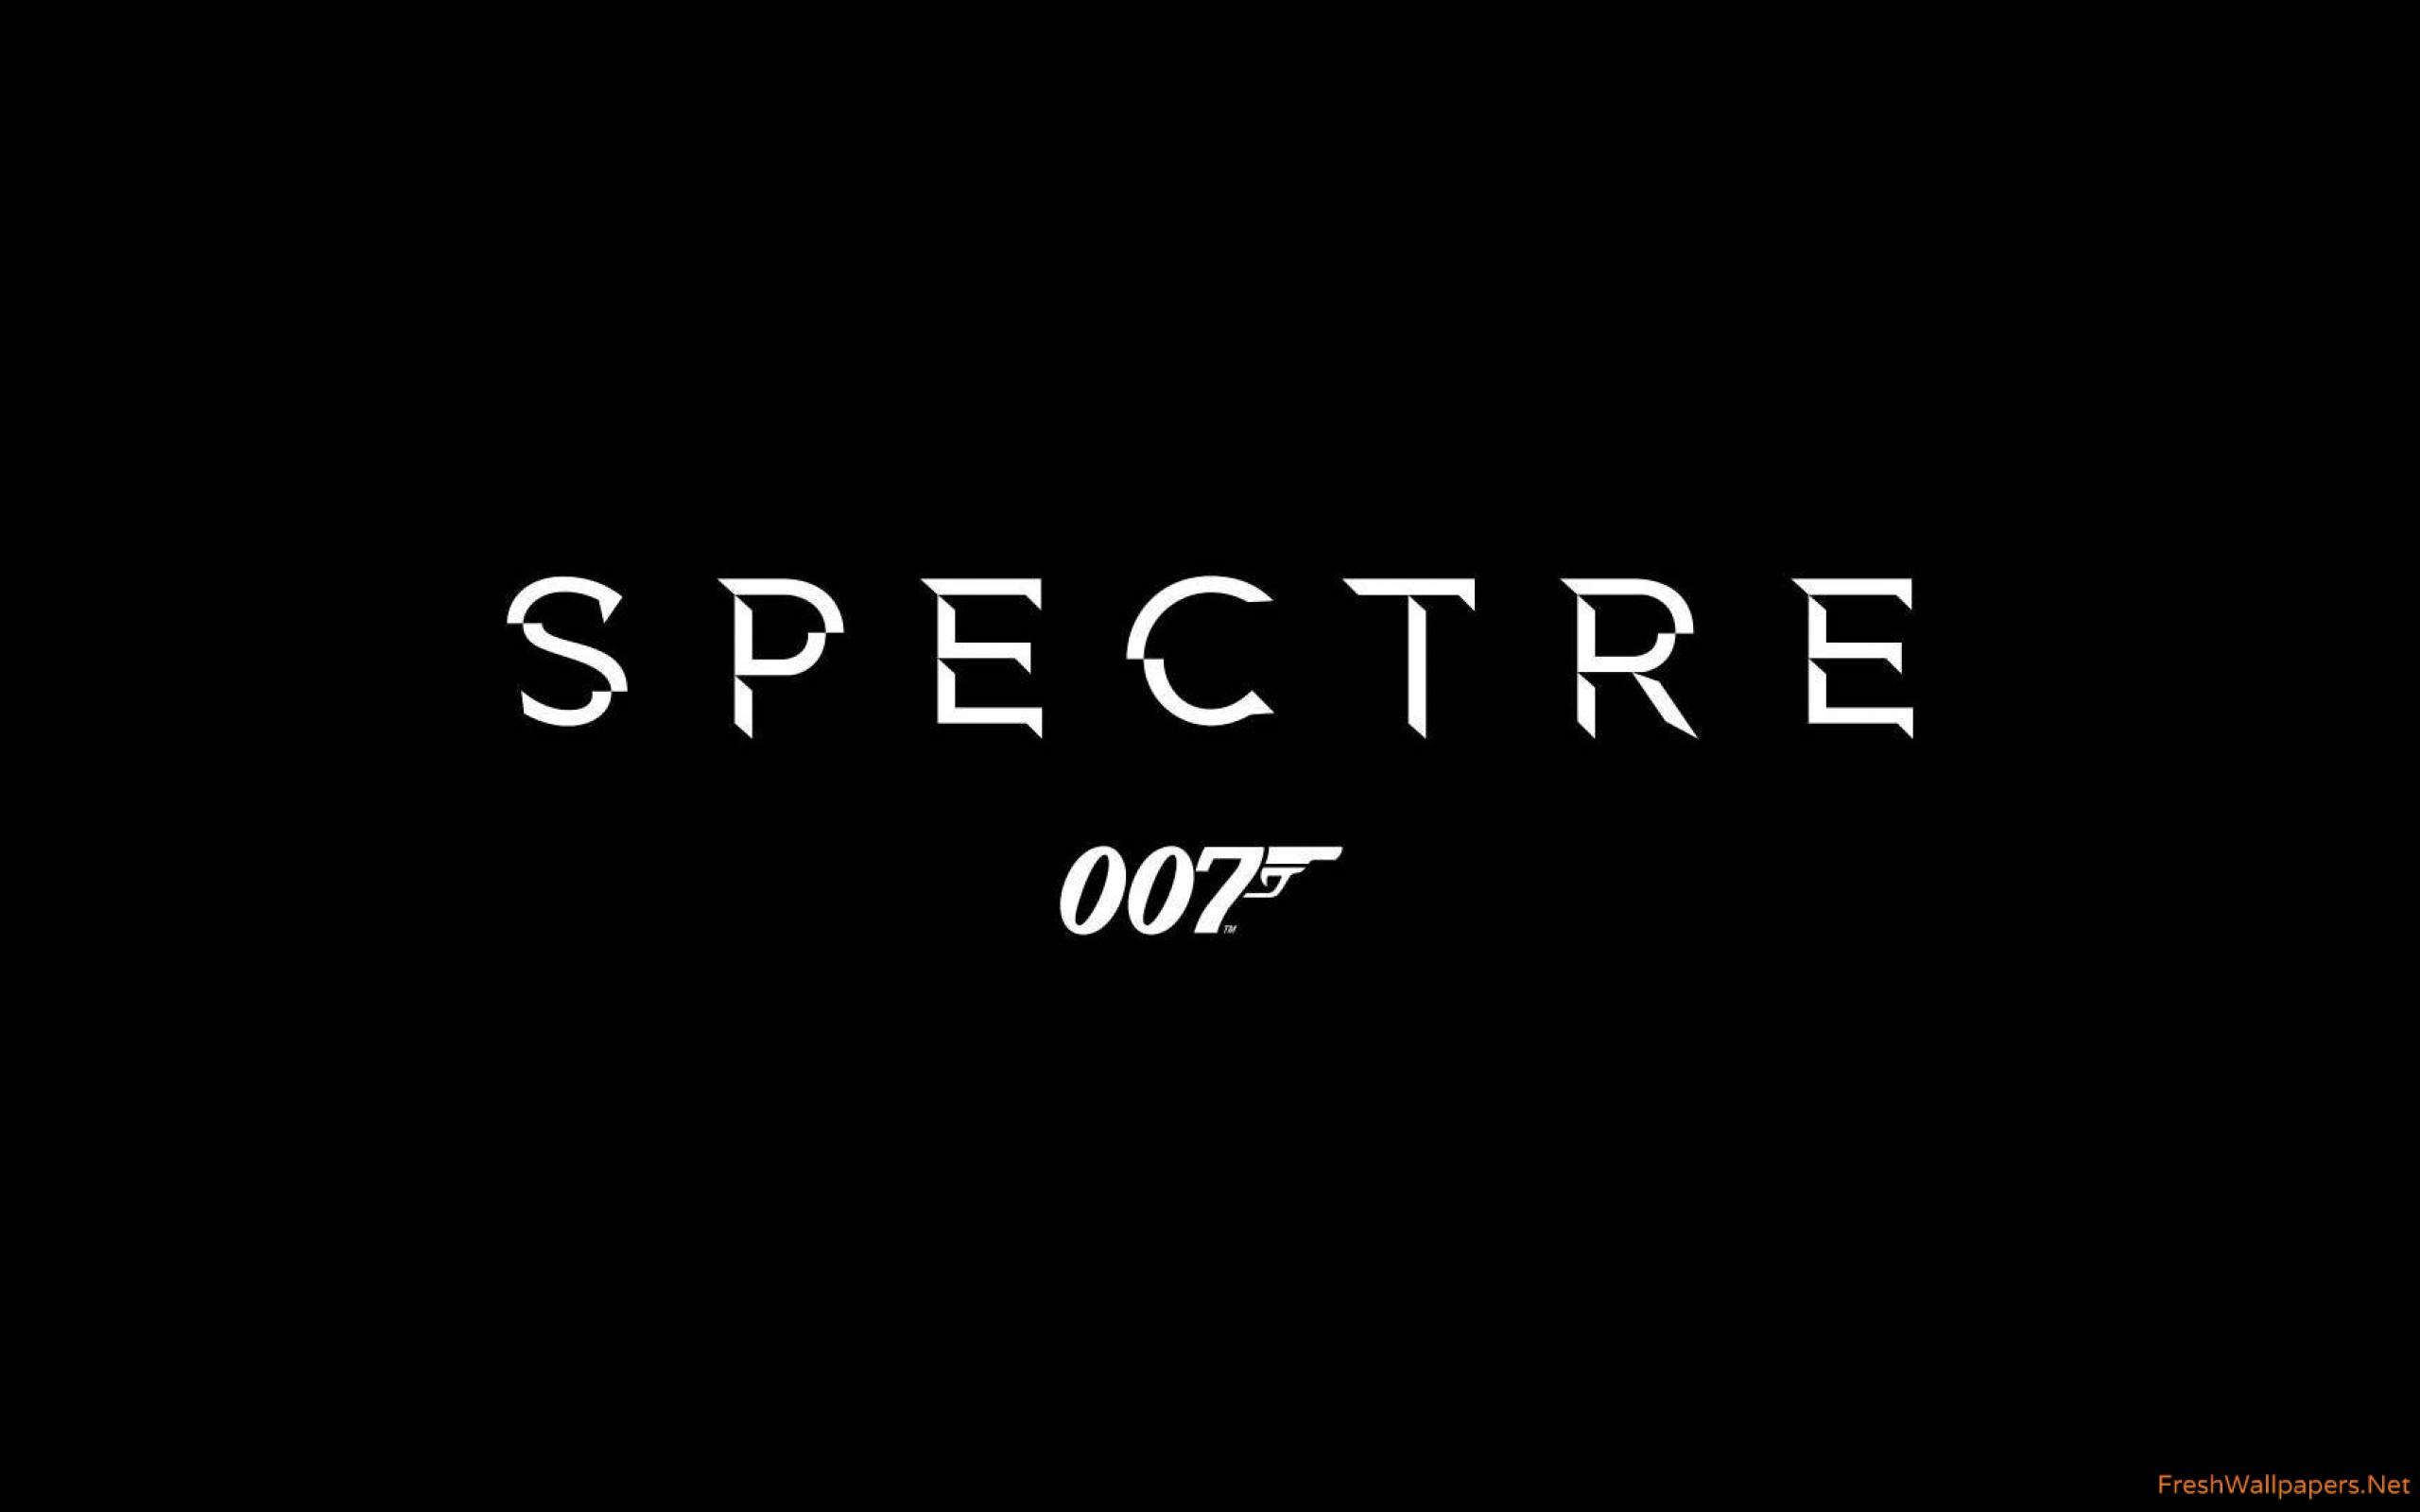 Spectre 007 wallpaper